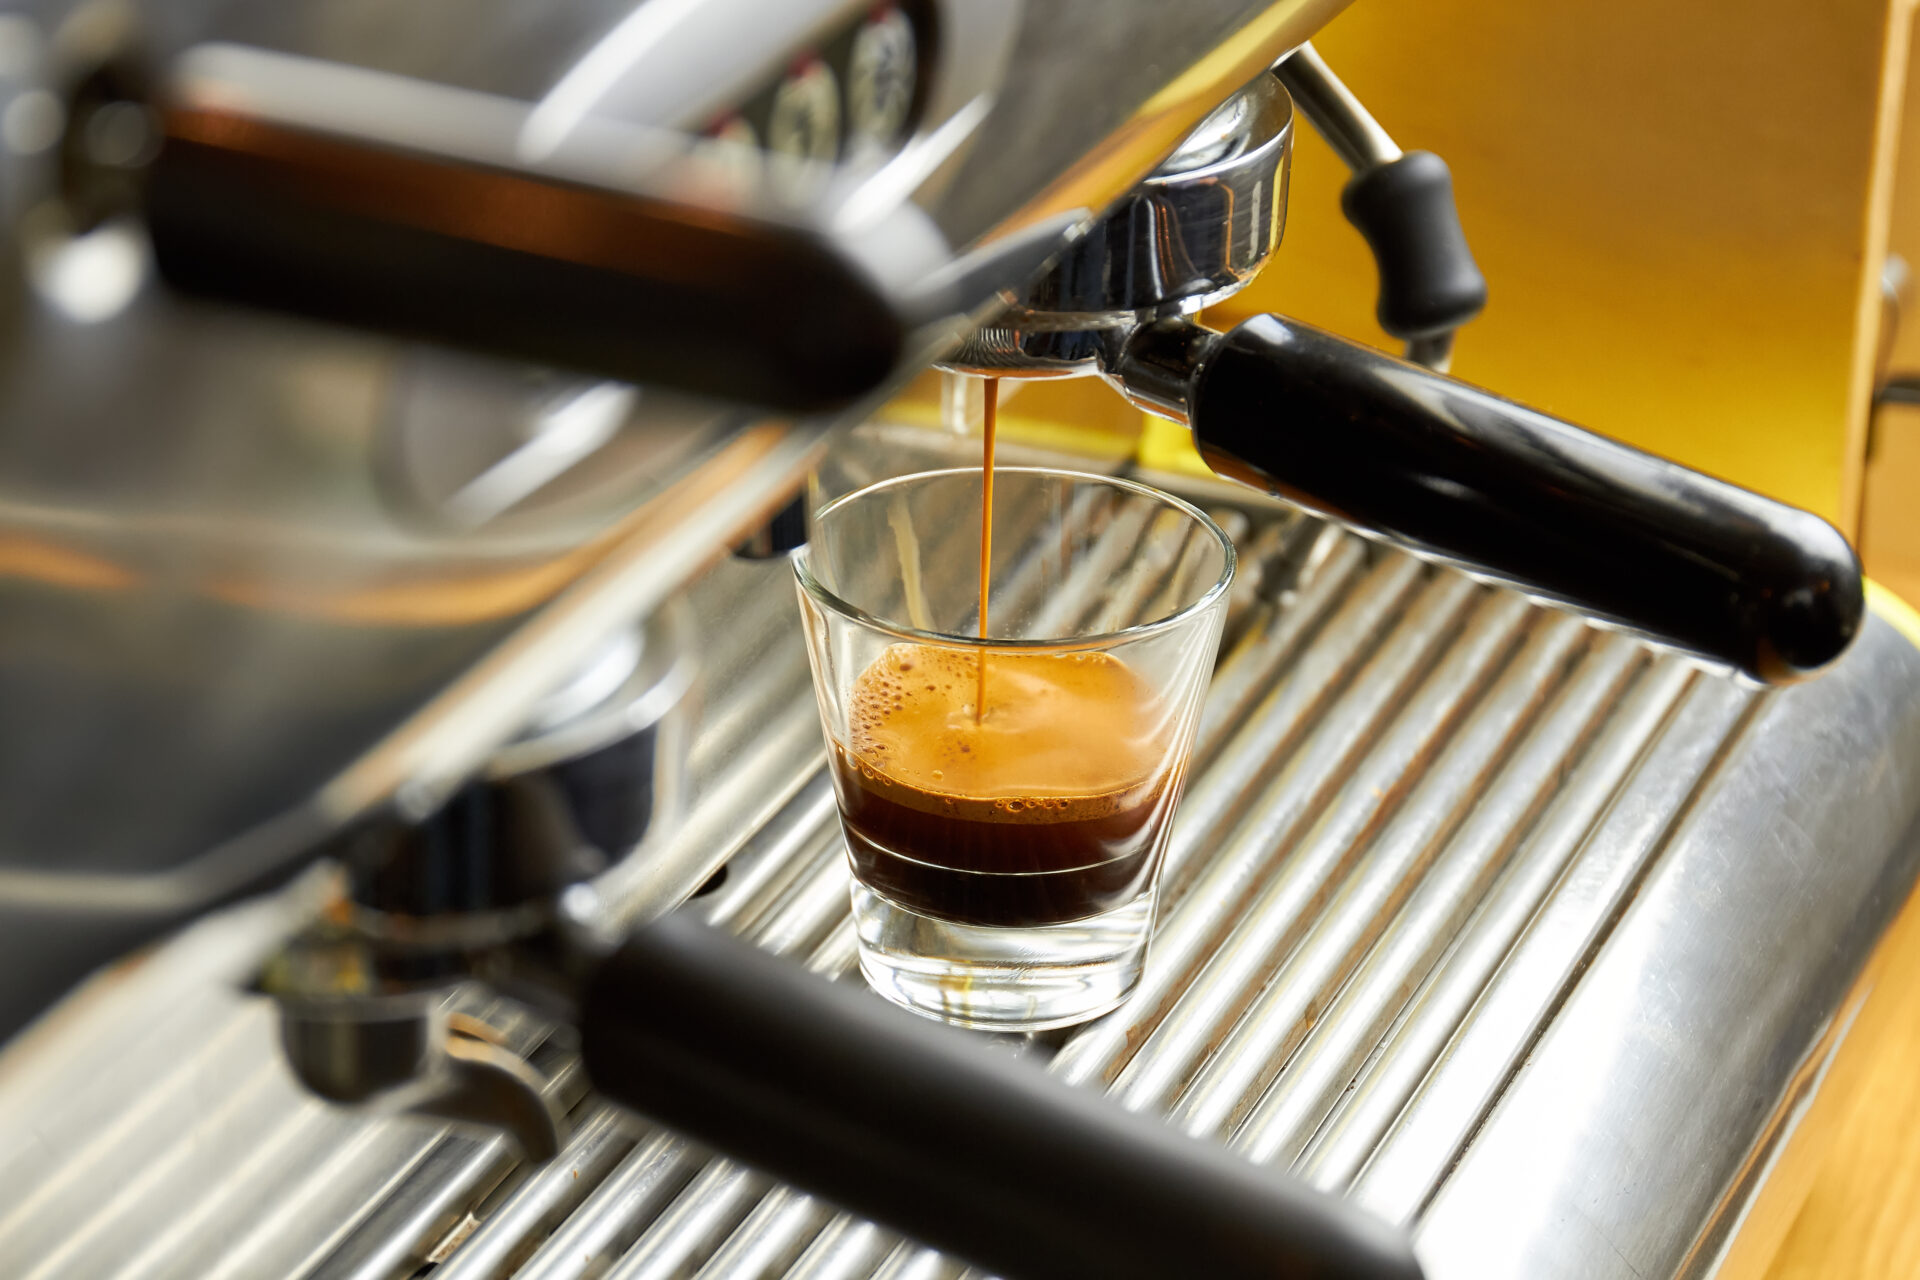 https://odisaequipa.com.mx/wp-content/uploads/2021/05/coffee-machine-pouring-espresso-67BV5X5-scaled.jpg